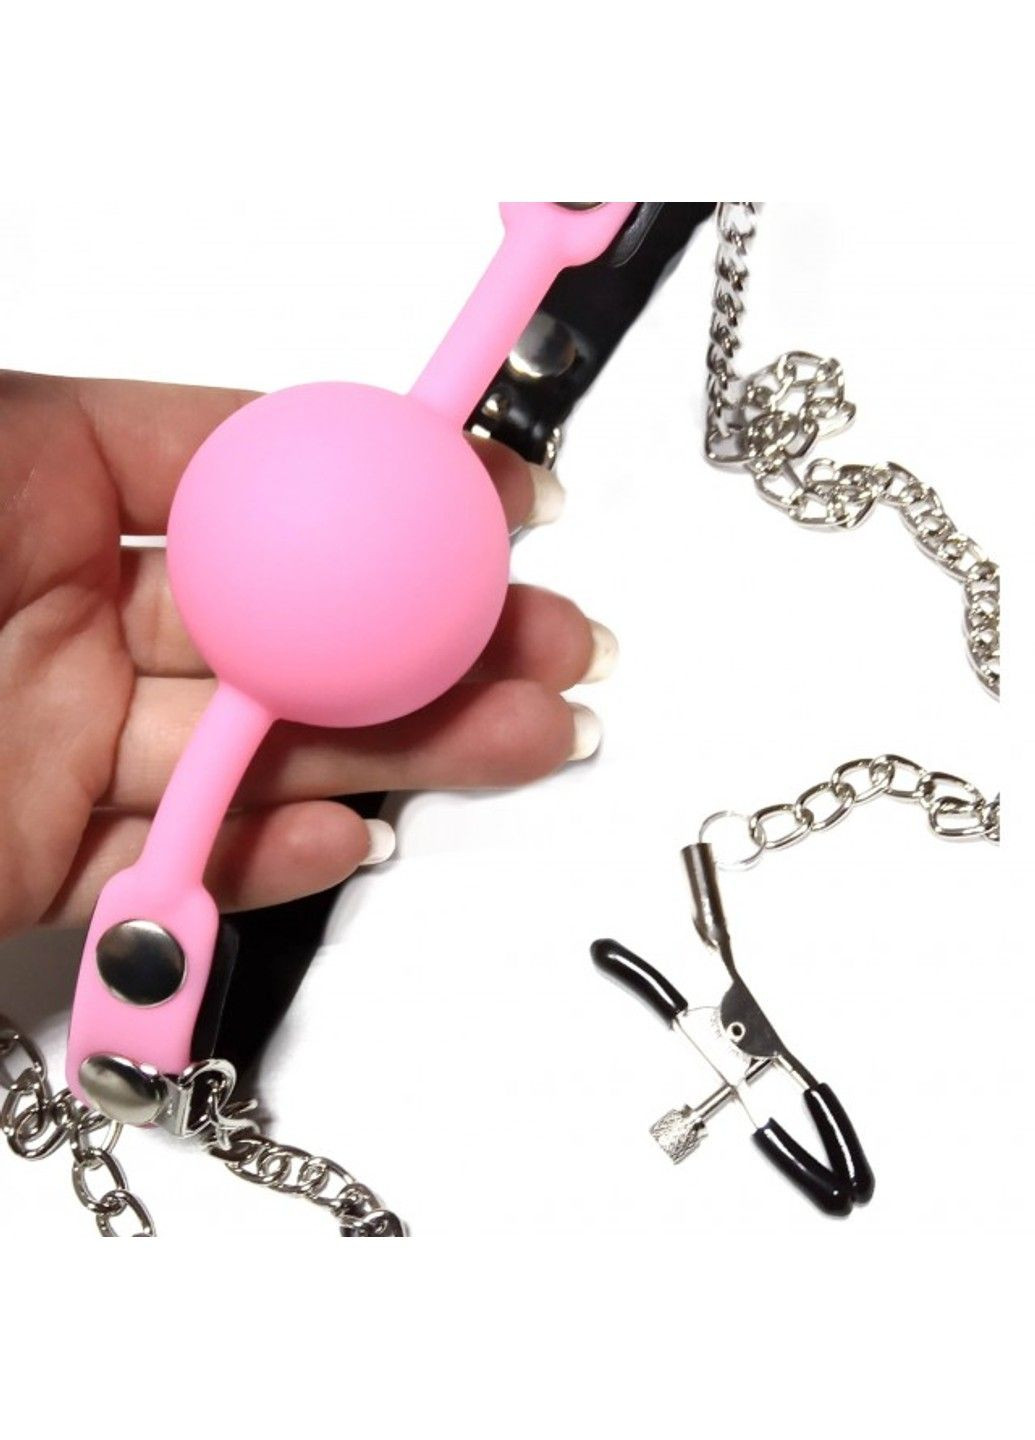 Кляп с зажимами на соски Locking gag with nipple clamps black/pink DS Fetish (292011515)